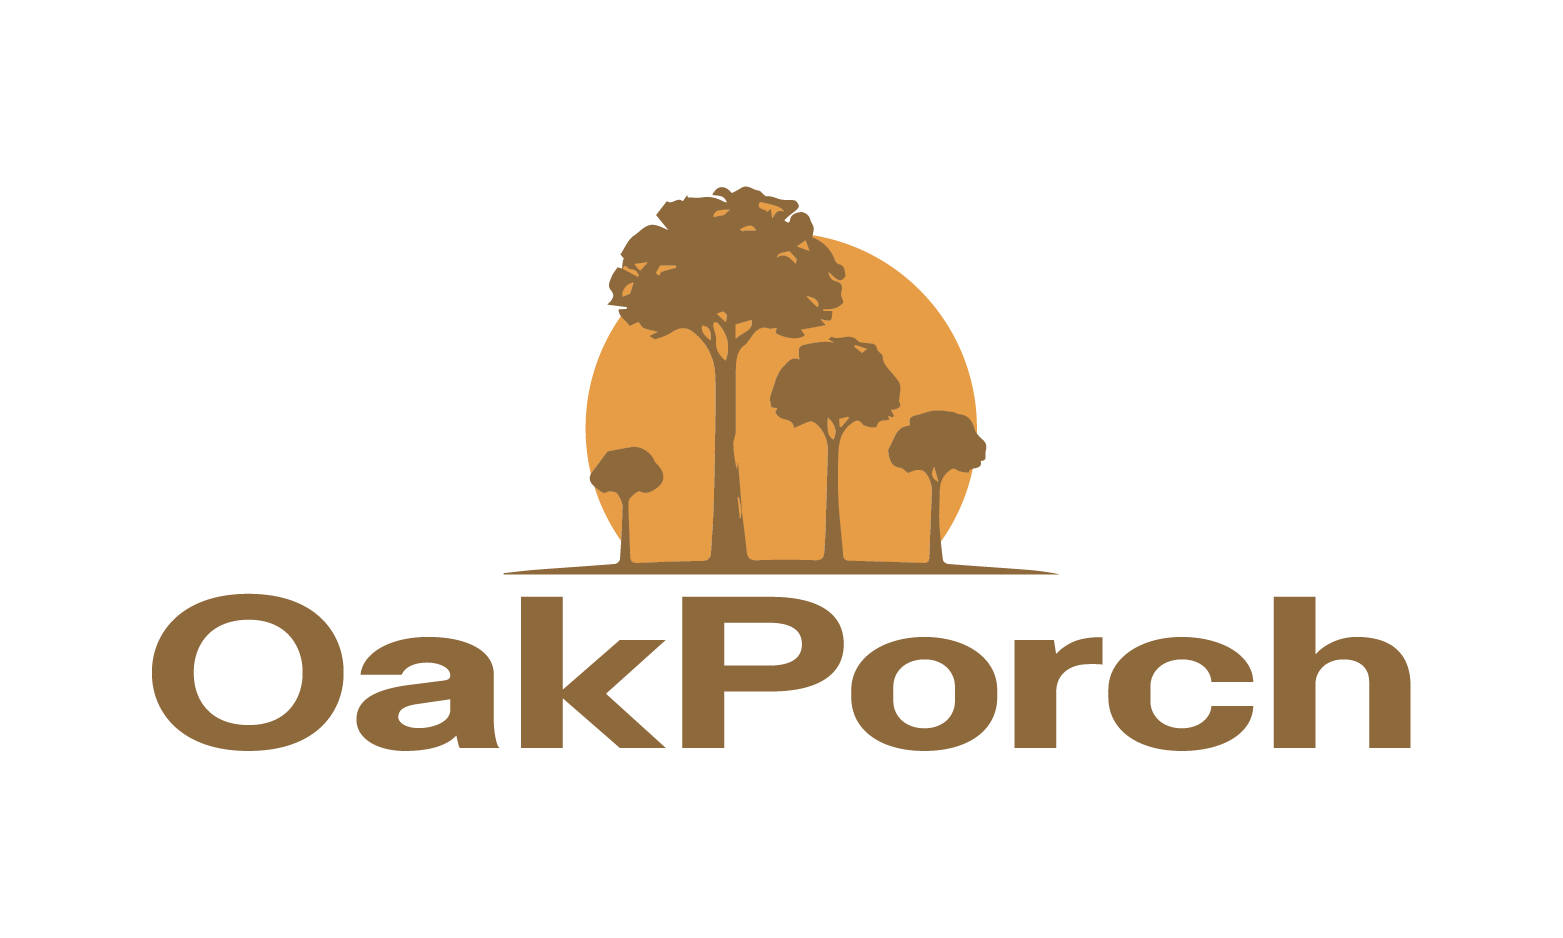 OakPorch.com - Creative brandable domain for sale